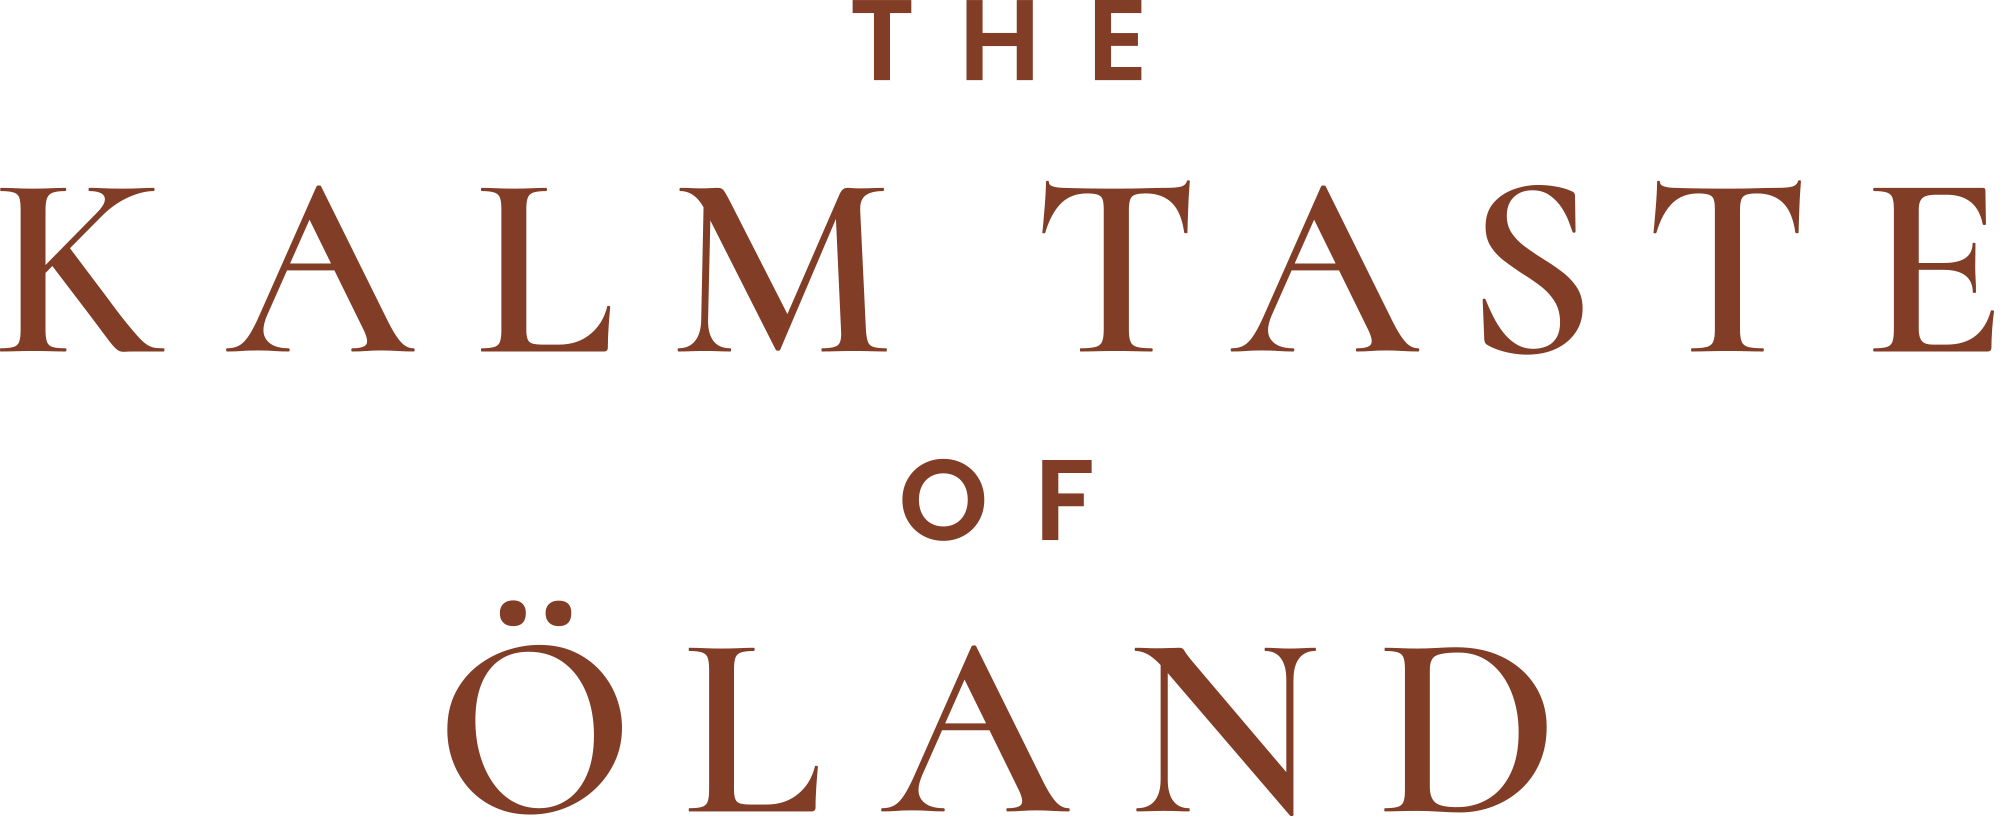 The Kalm Taste of Öland